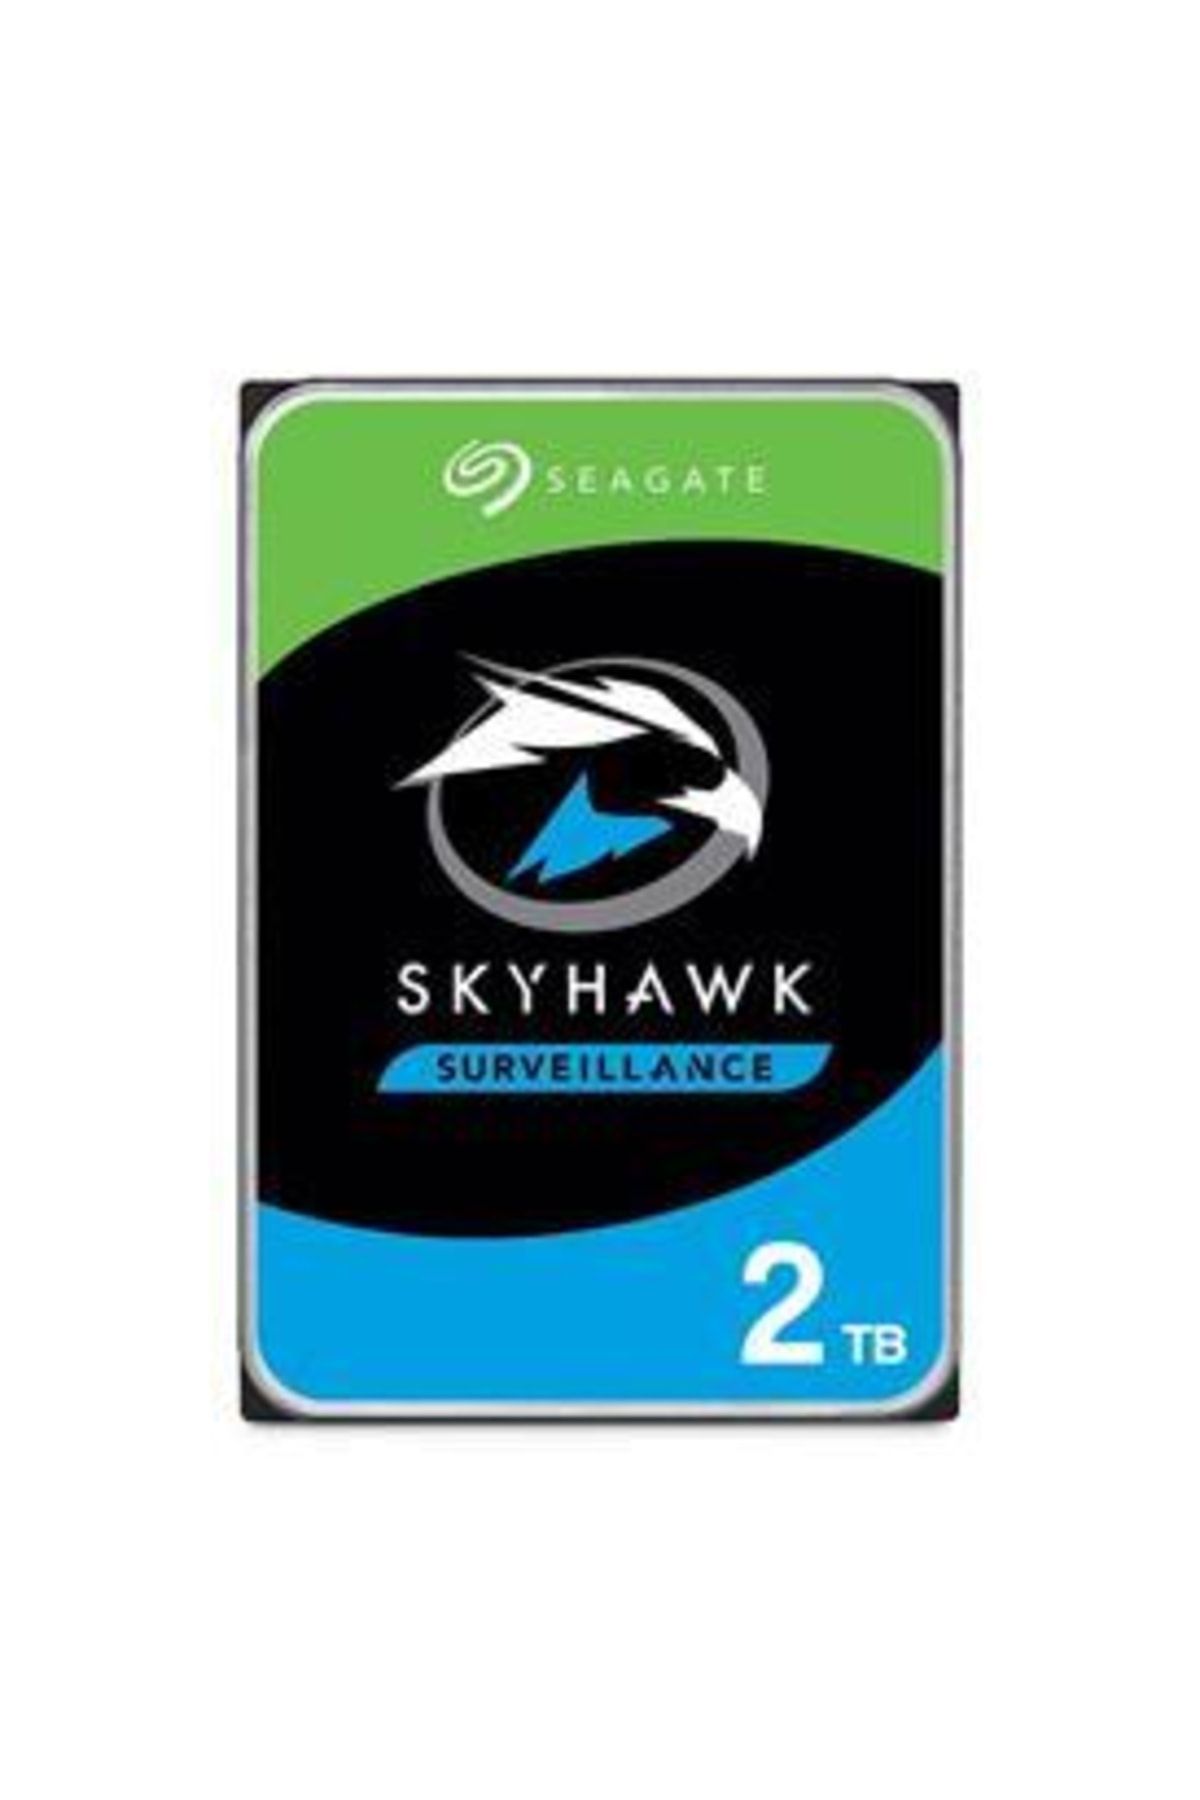 Seagate Skyhawk 2 Tb 256mb Sata3 180tb/y 7/24 (st2000vx015)